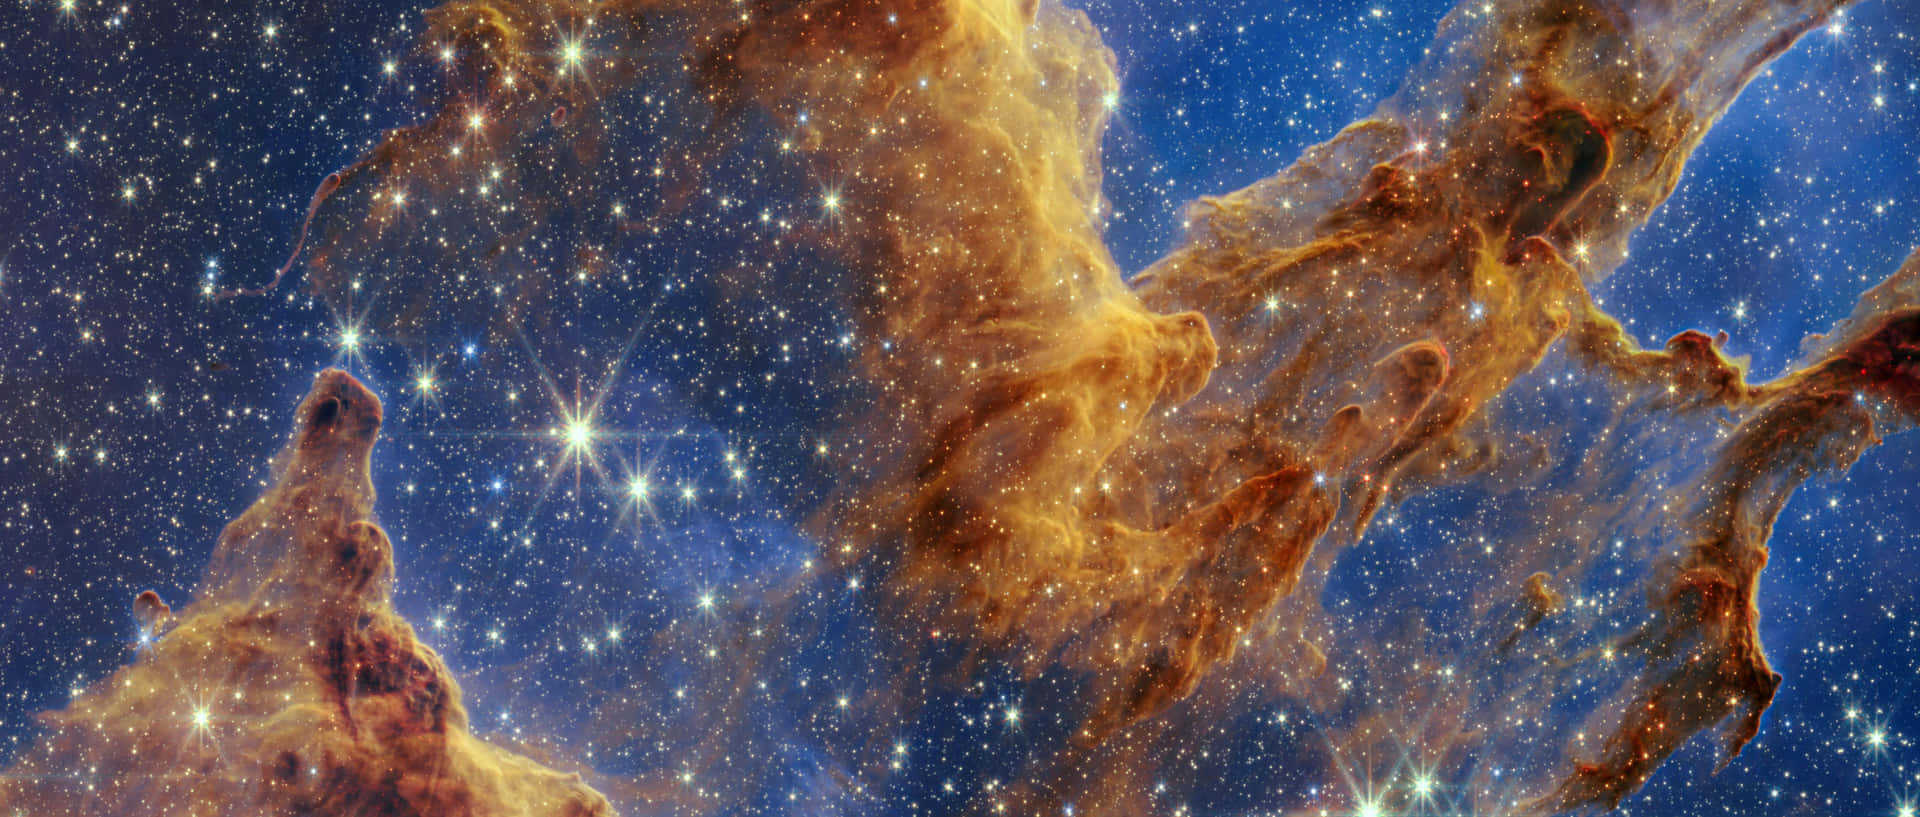 James Webb Space Nebula Stellar Nursery Wallpaper